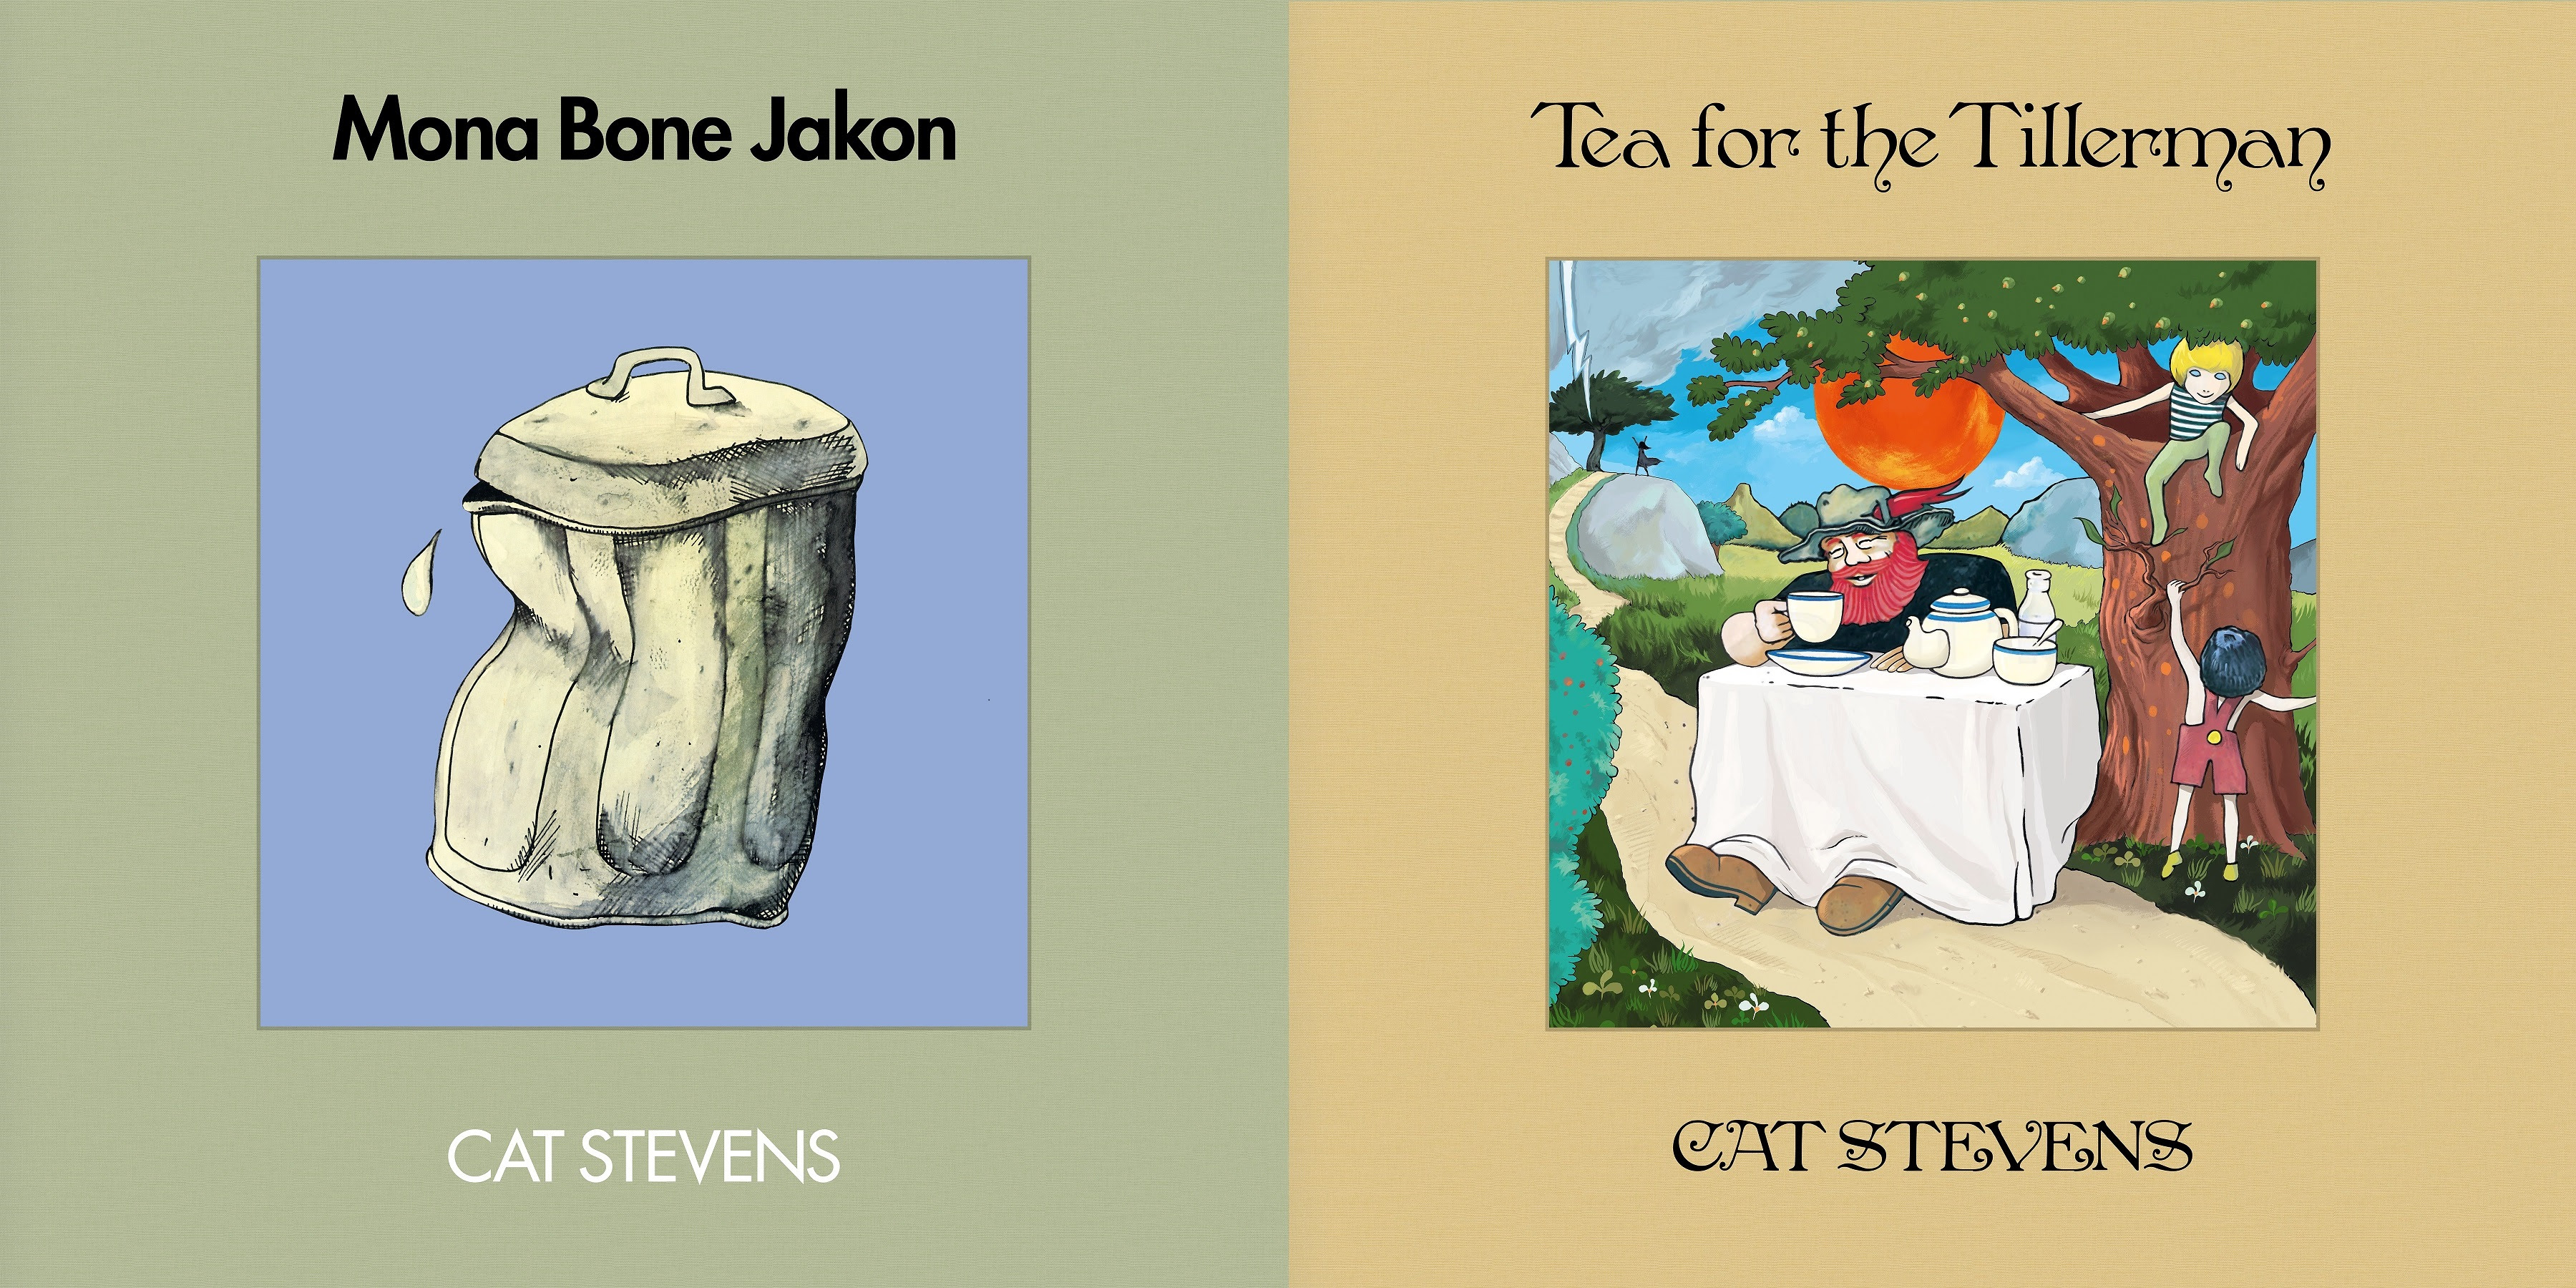 Yusuf / Cat Stevens' Classic Albums 'Mona Bone Jakon' & 'Tea for